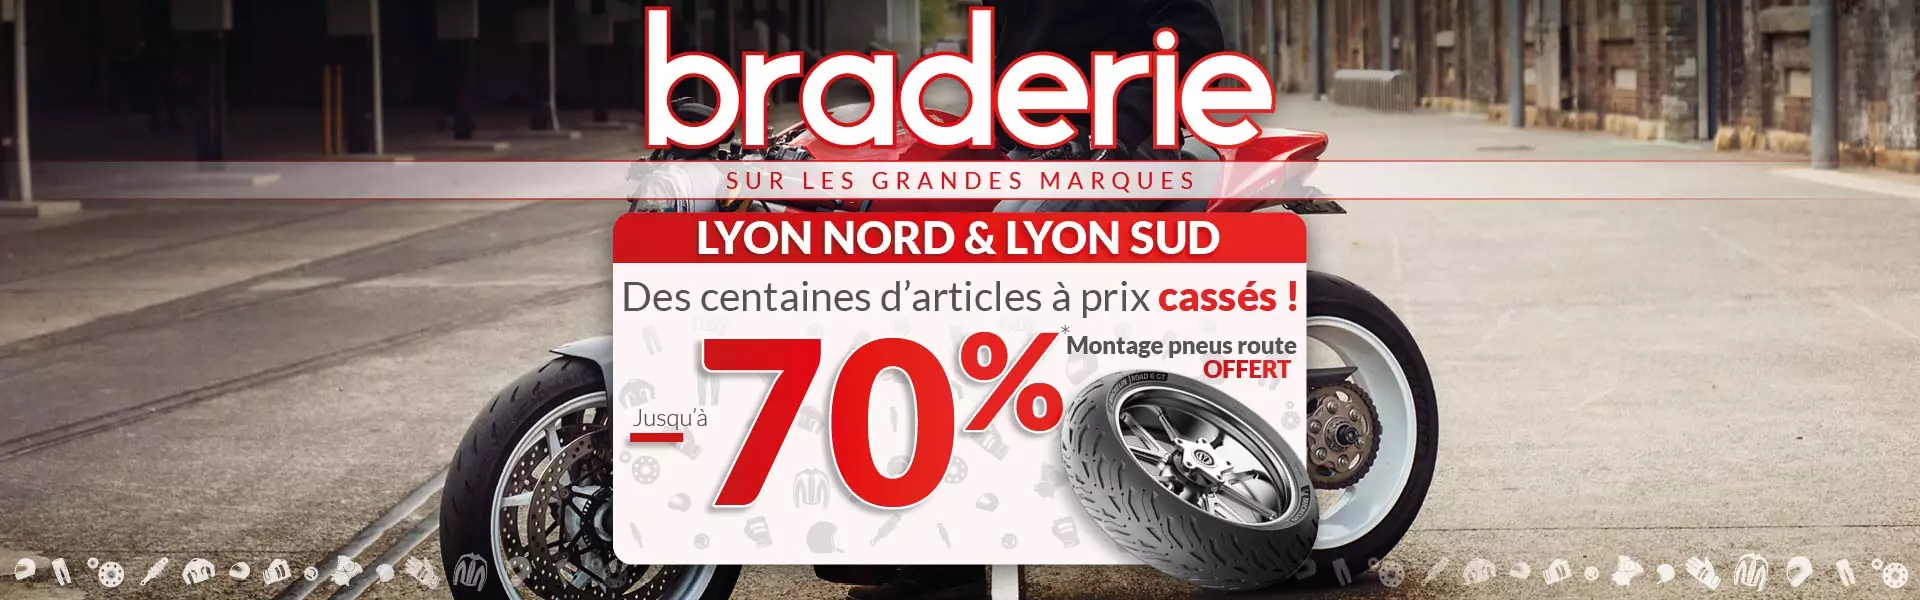 Braderie Cardy Lyon